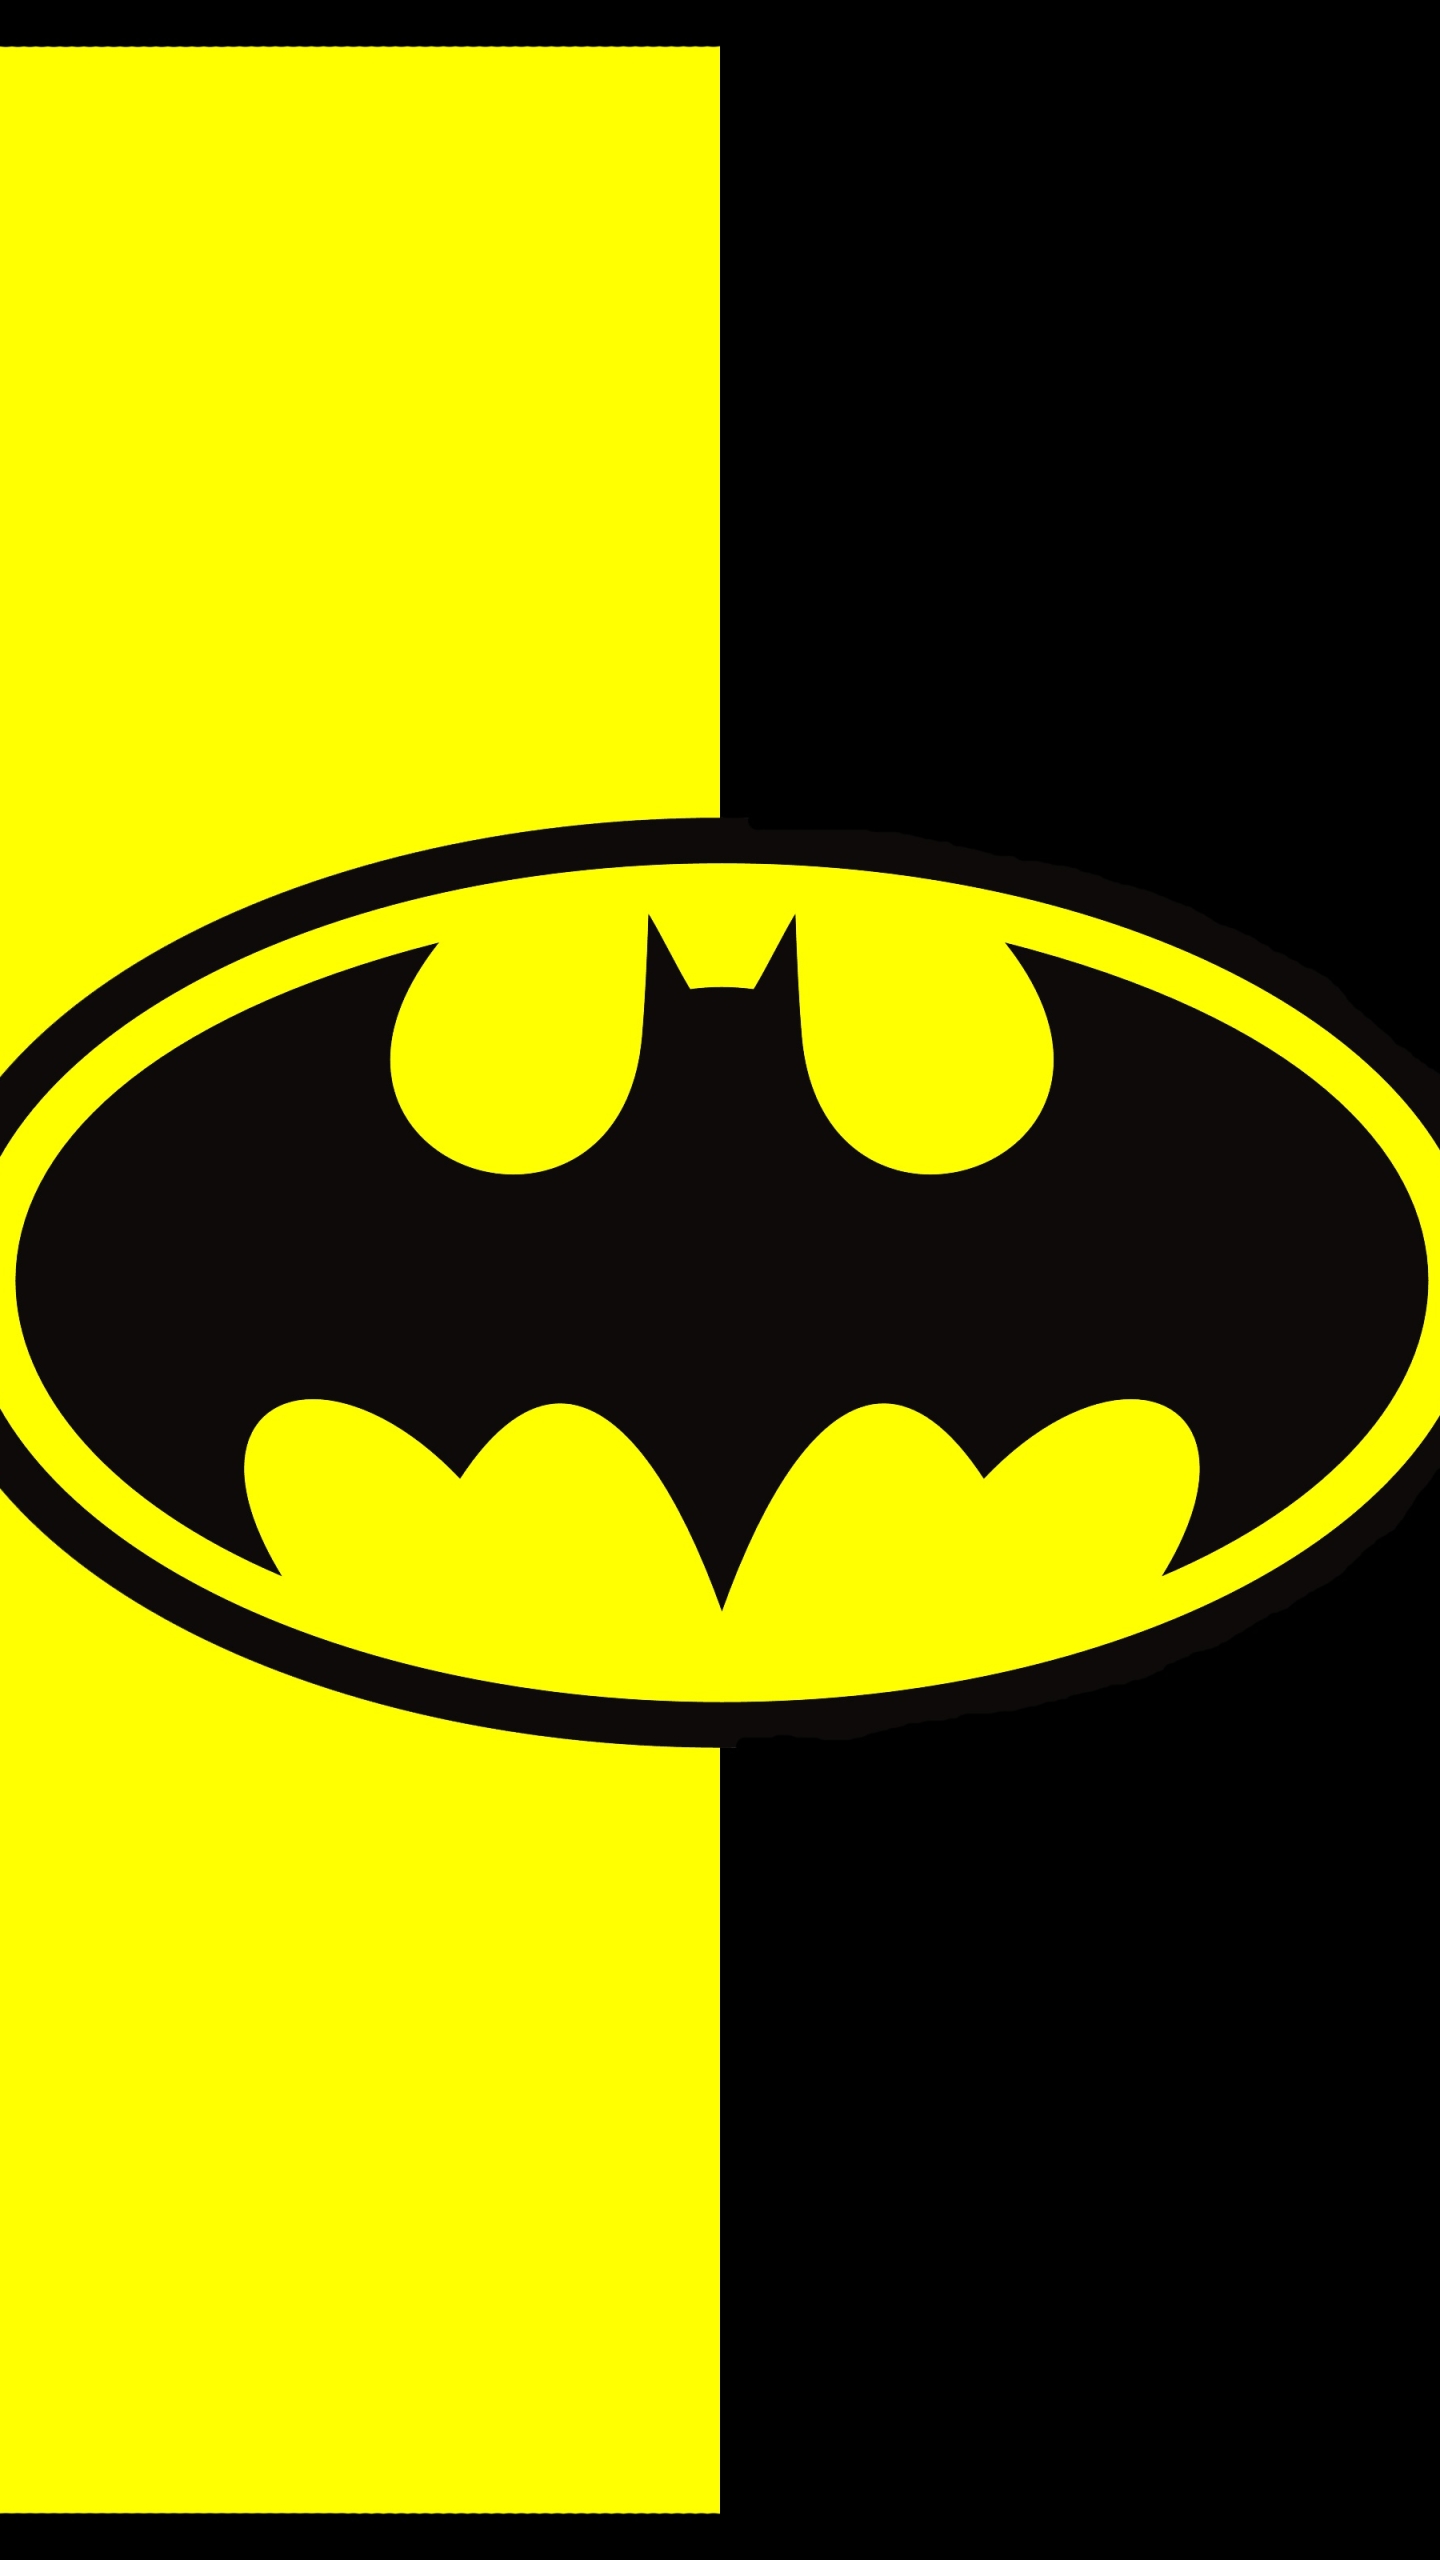  Batman Logo Tablet Wallpapers